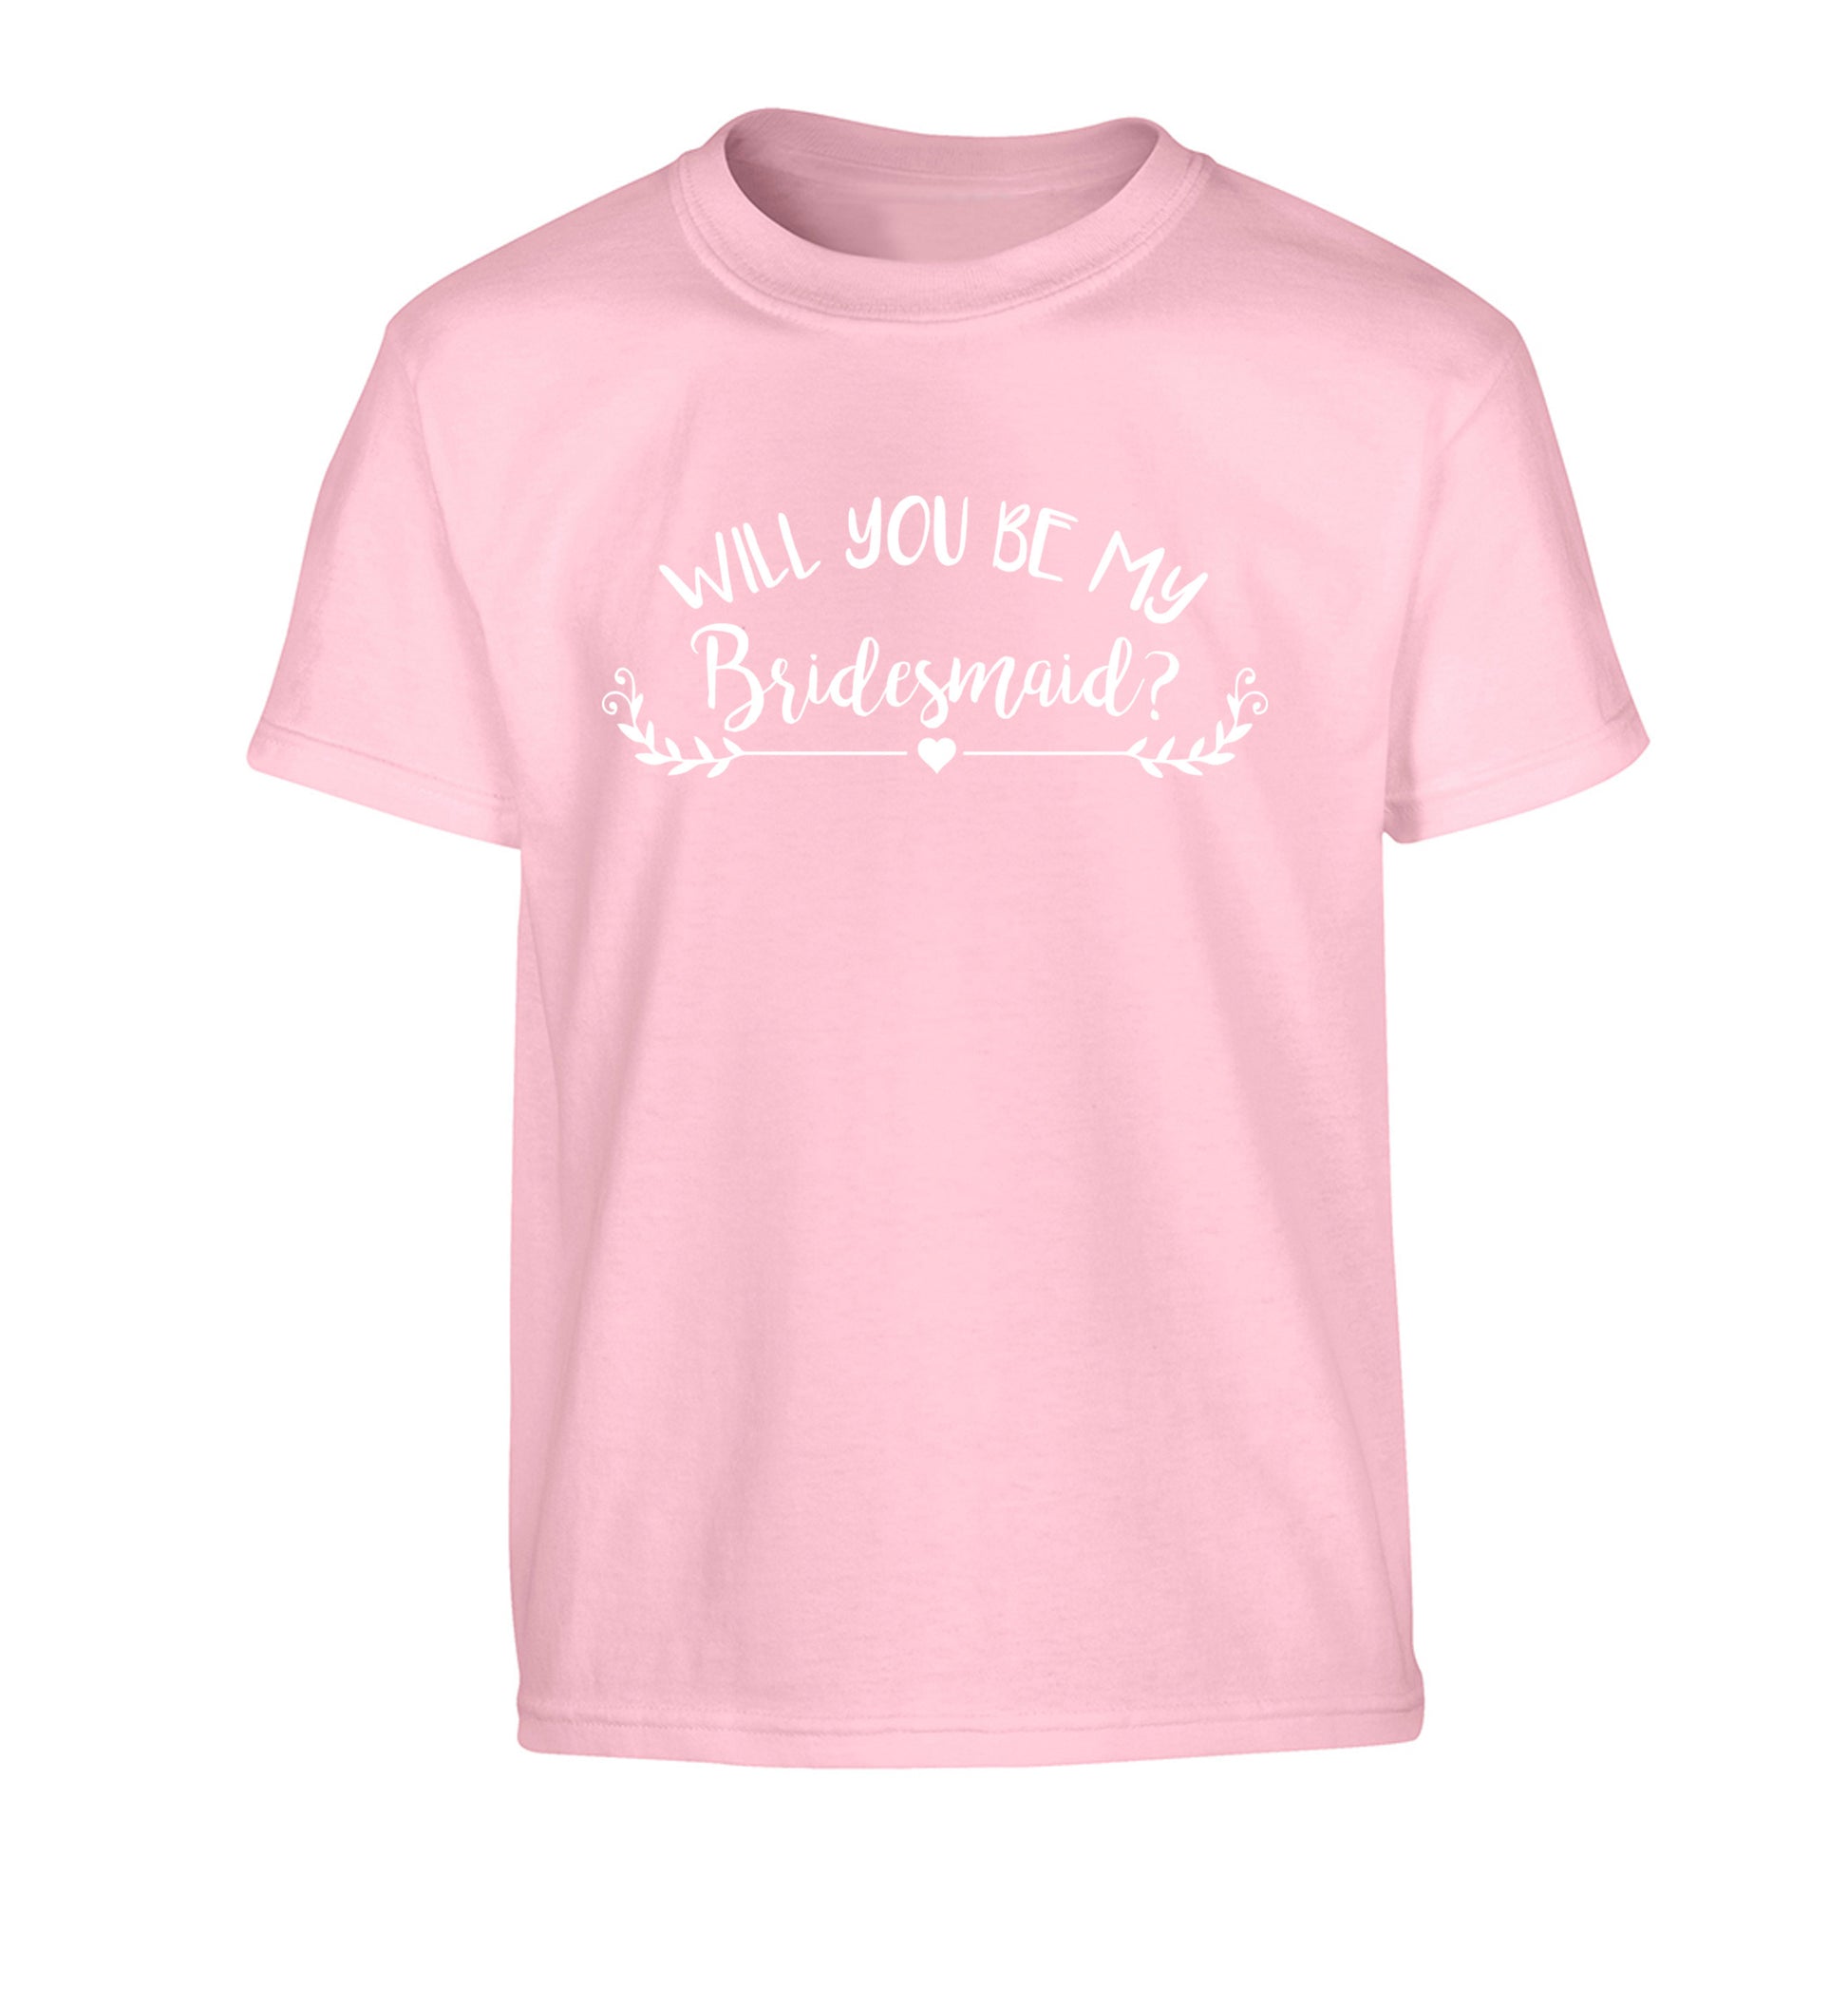 Will you be my bridesmaid? Children's light pink Tshirt 12-14 Years